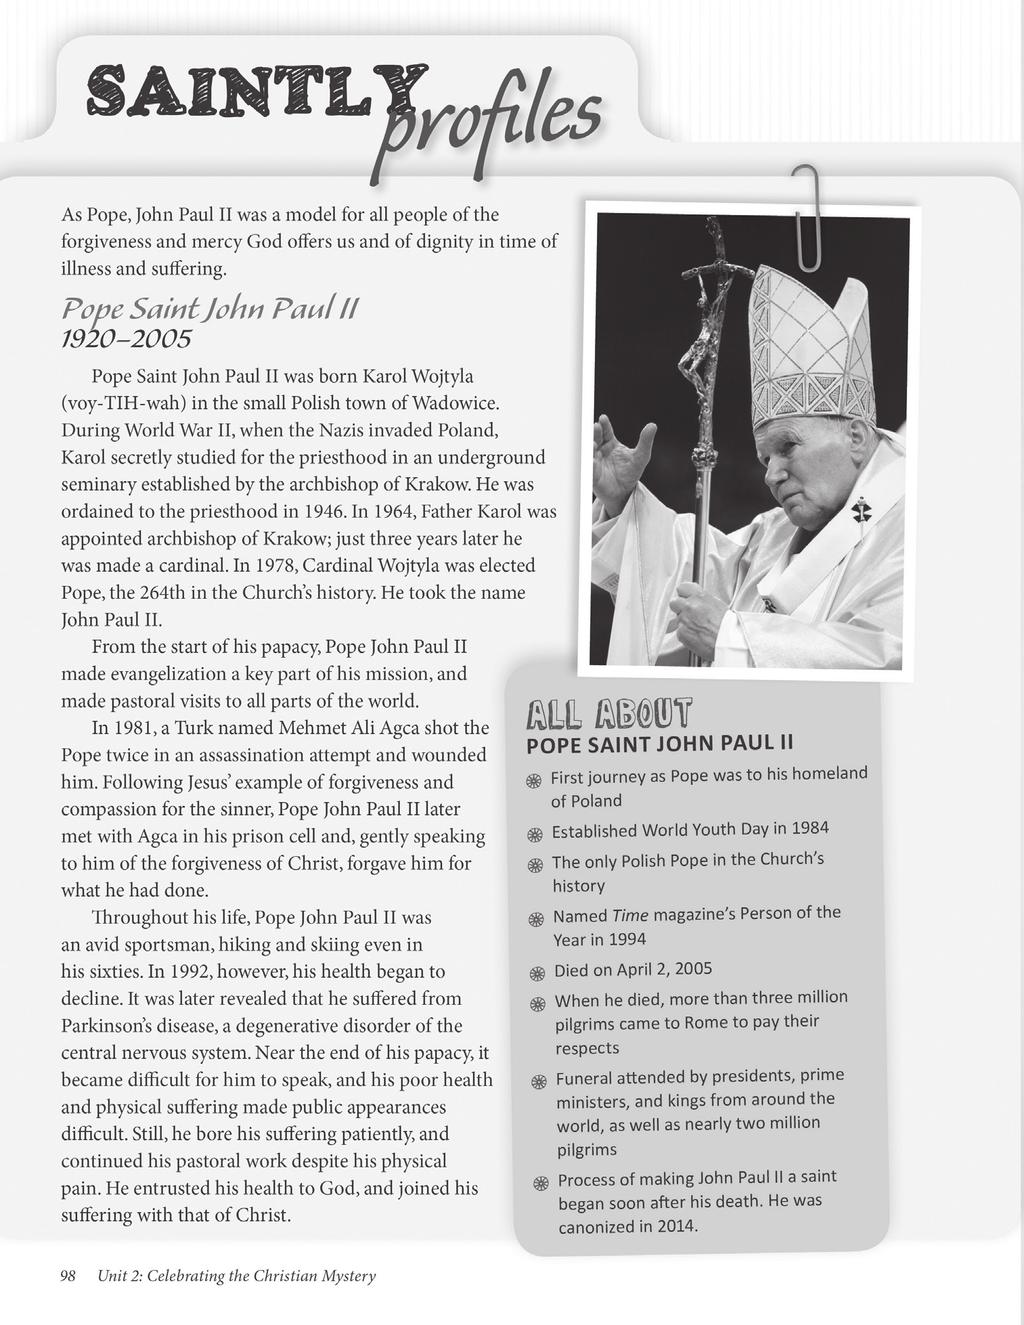 Saintly Profiles Pope Saint John Paul II Read aloud the introduction. Then invite a volunteer to read aloud the story of Pope Saint John Paul II.